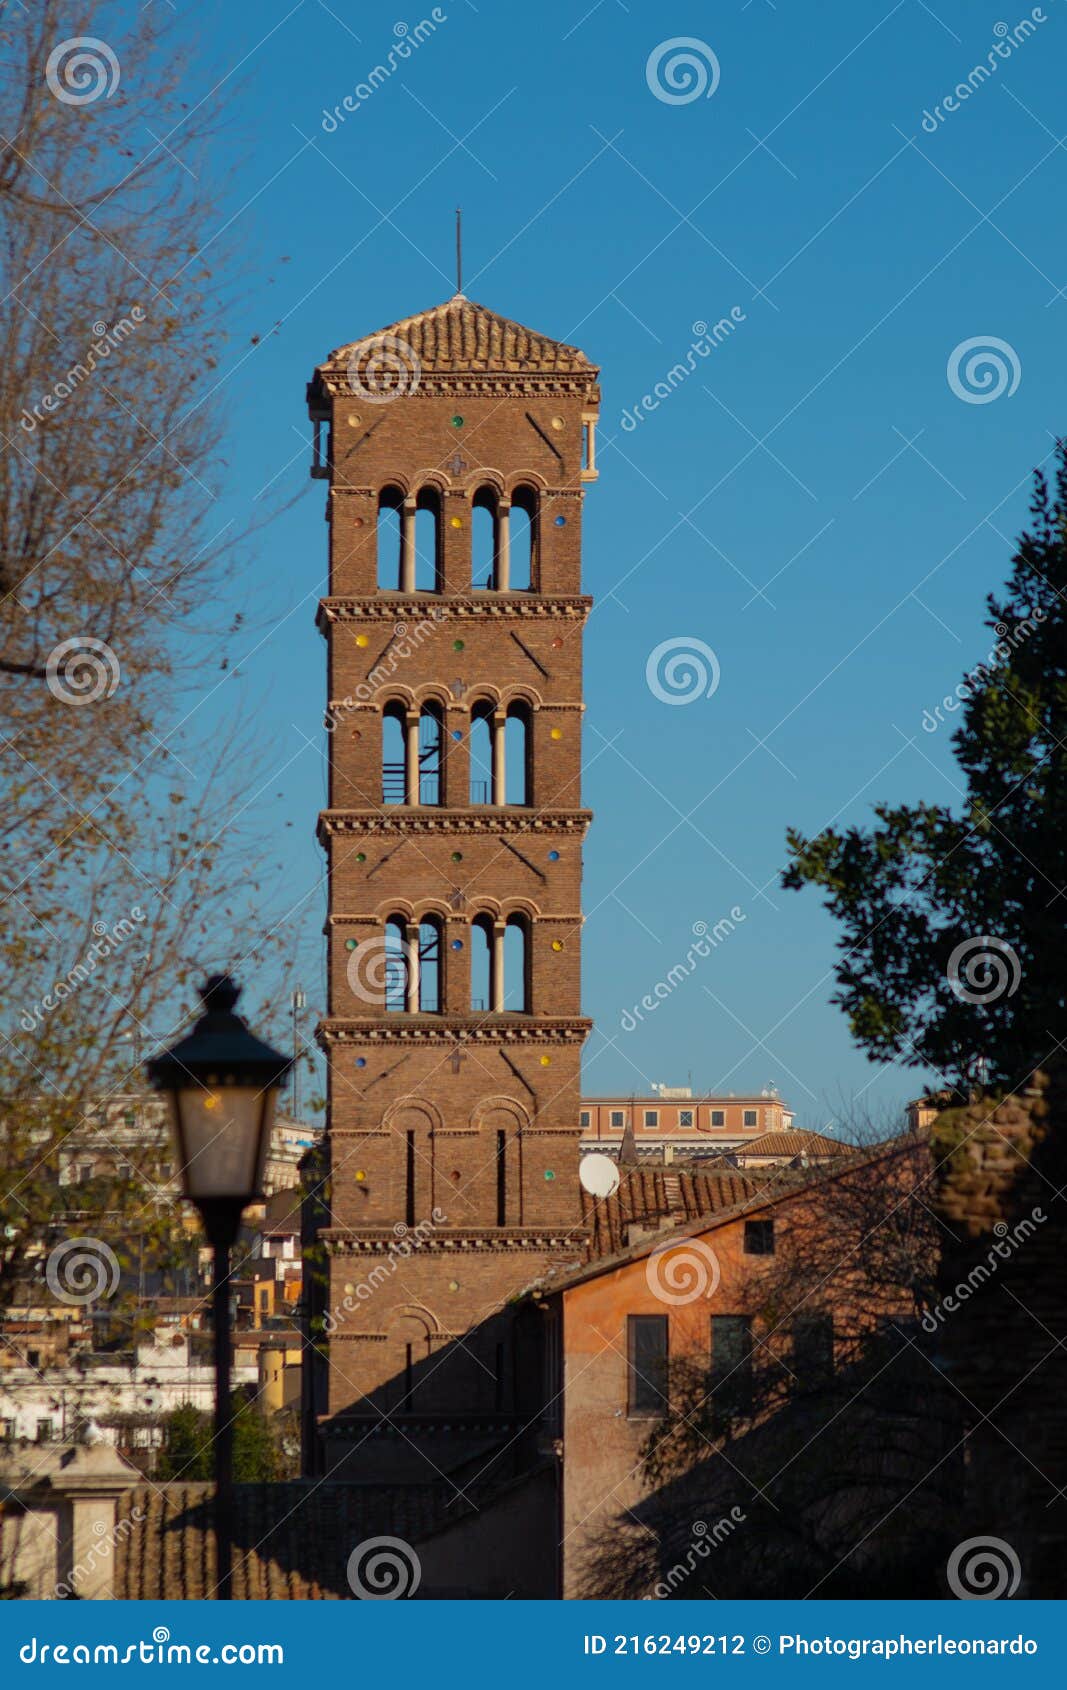 details of the basilica de santa francesca romana, rome, italy